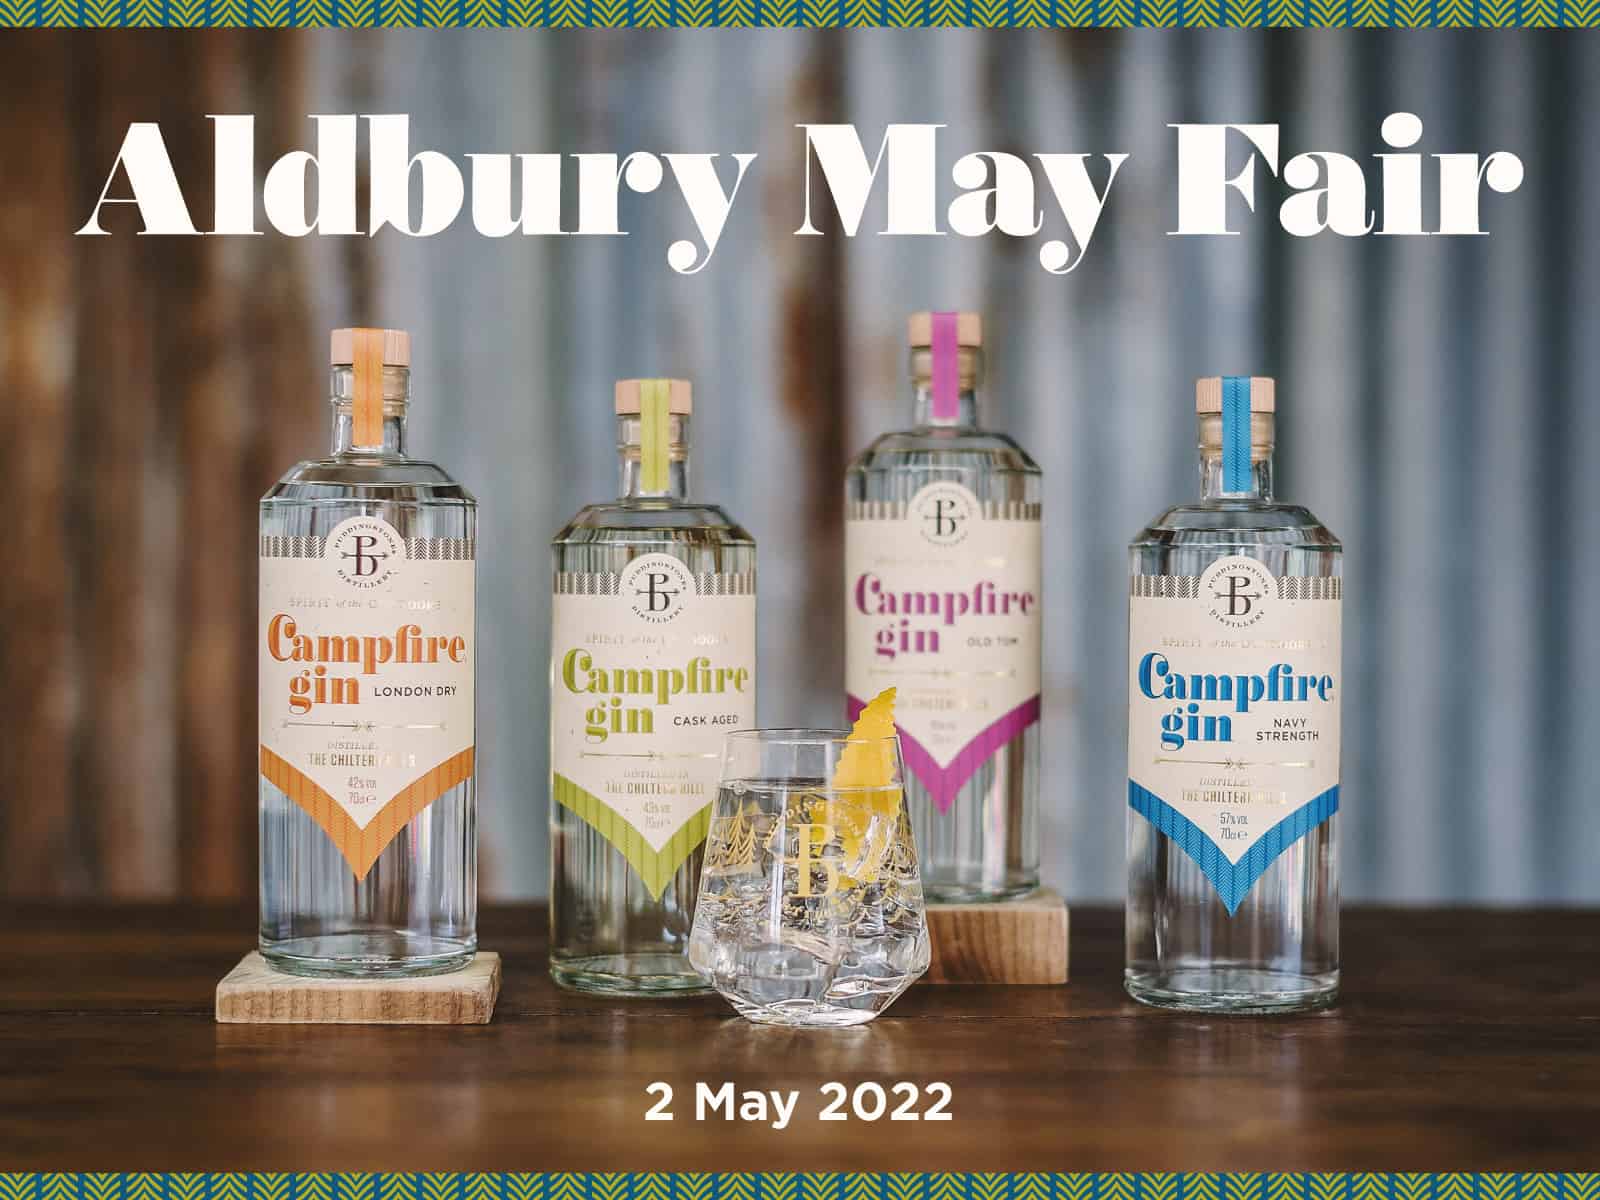 Aldbury May Fair 2022